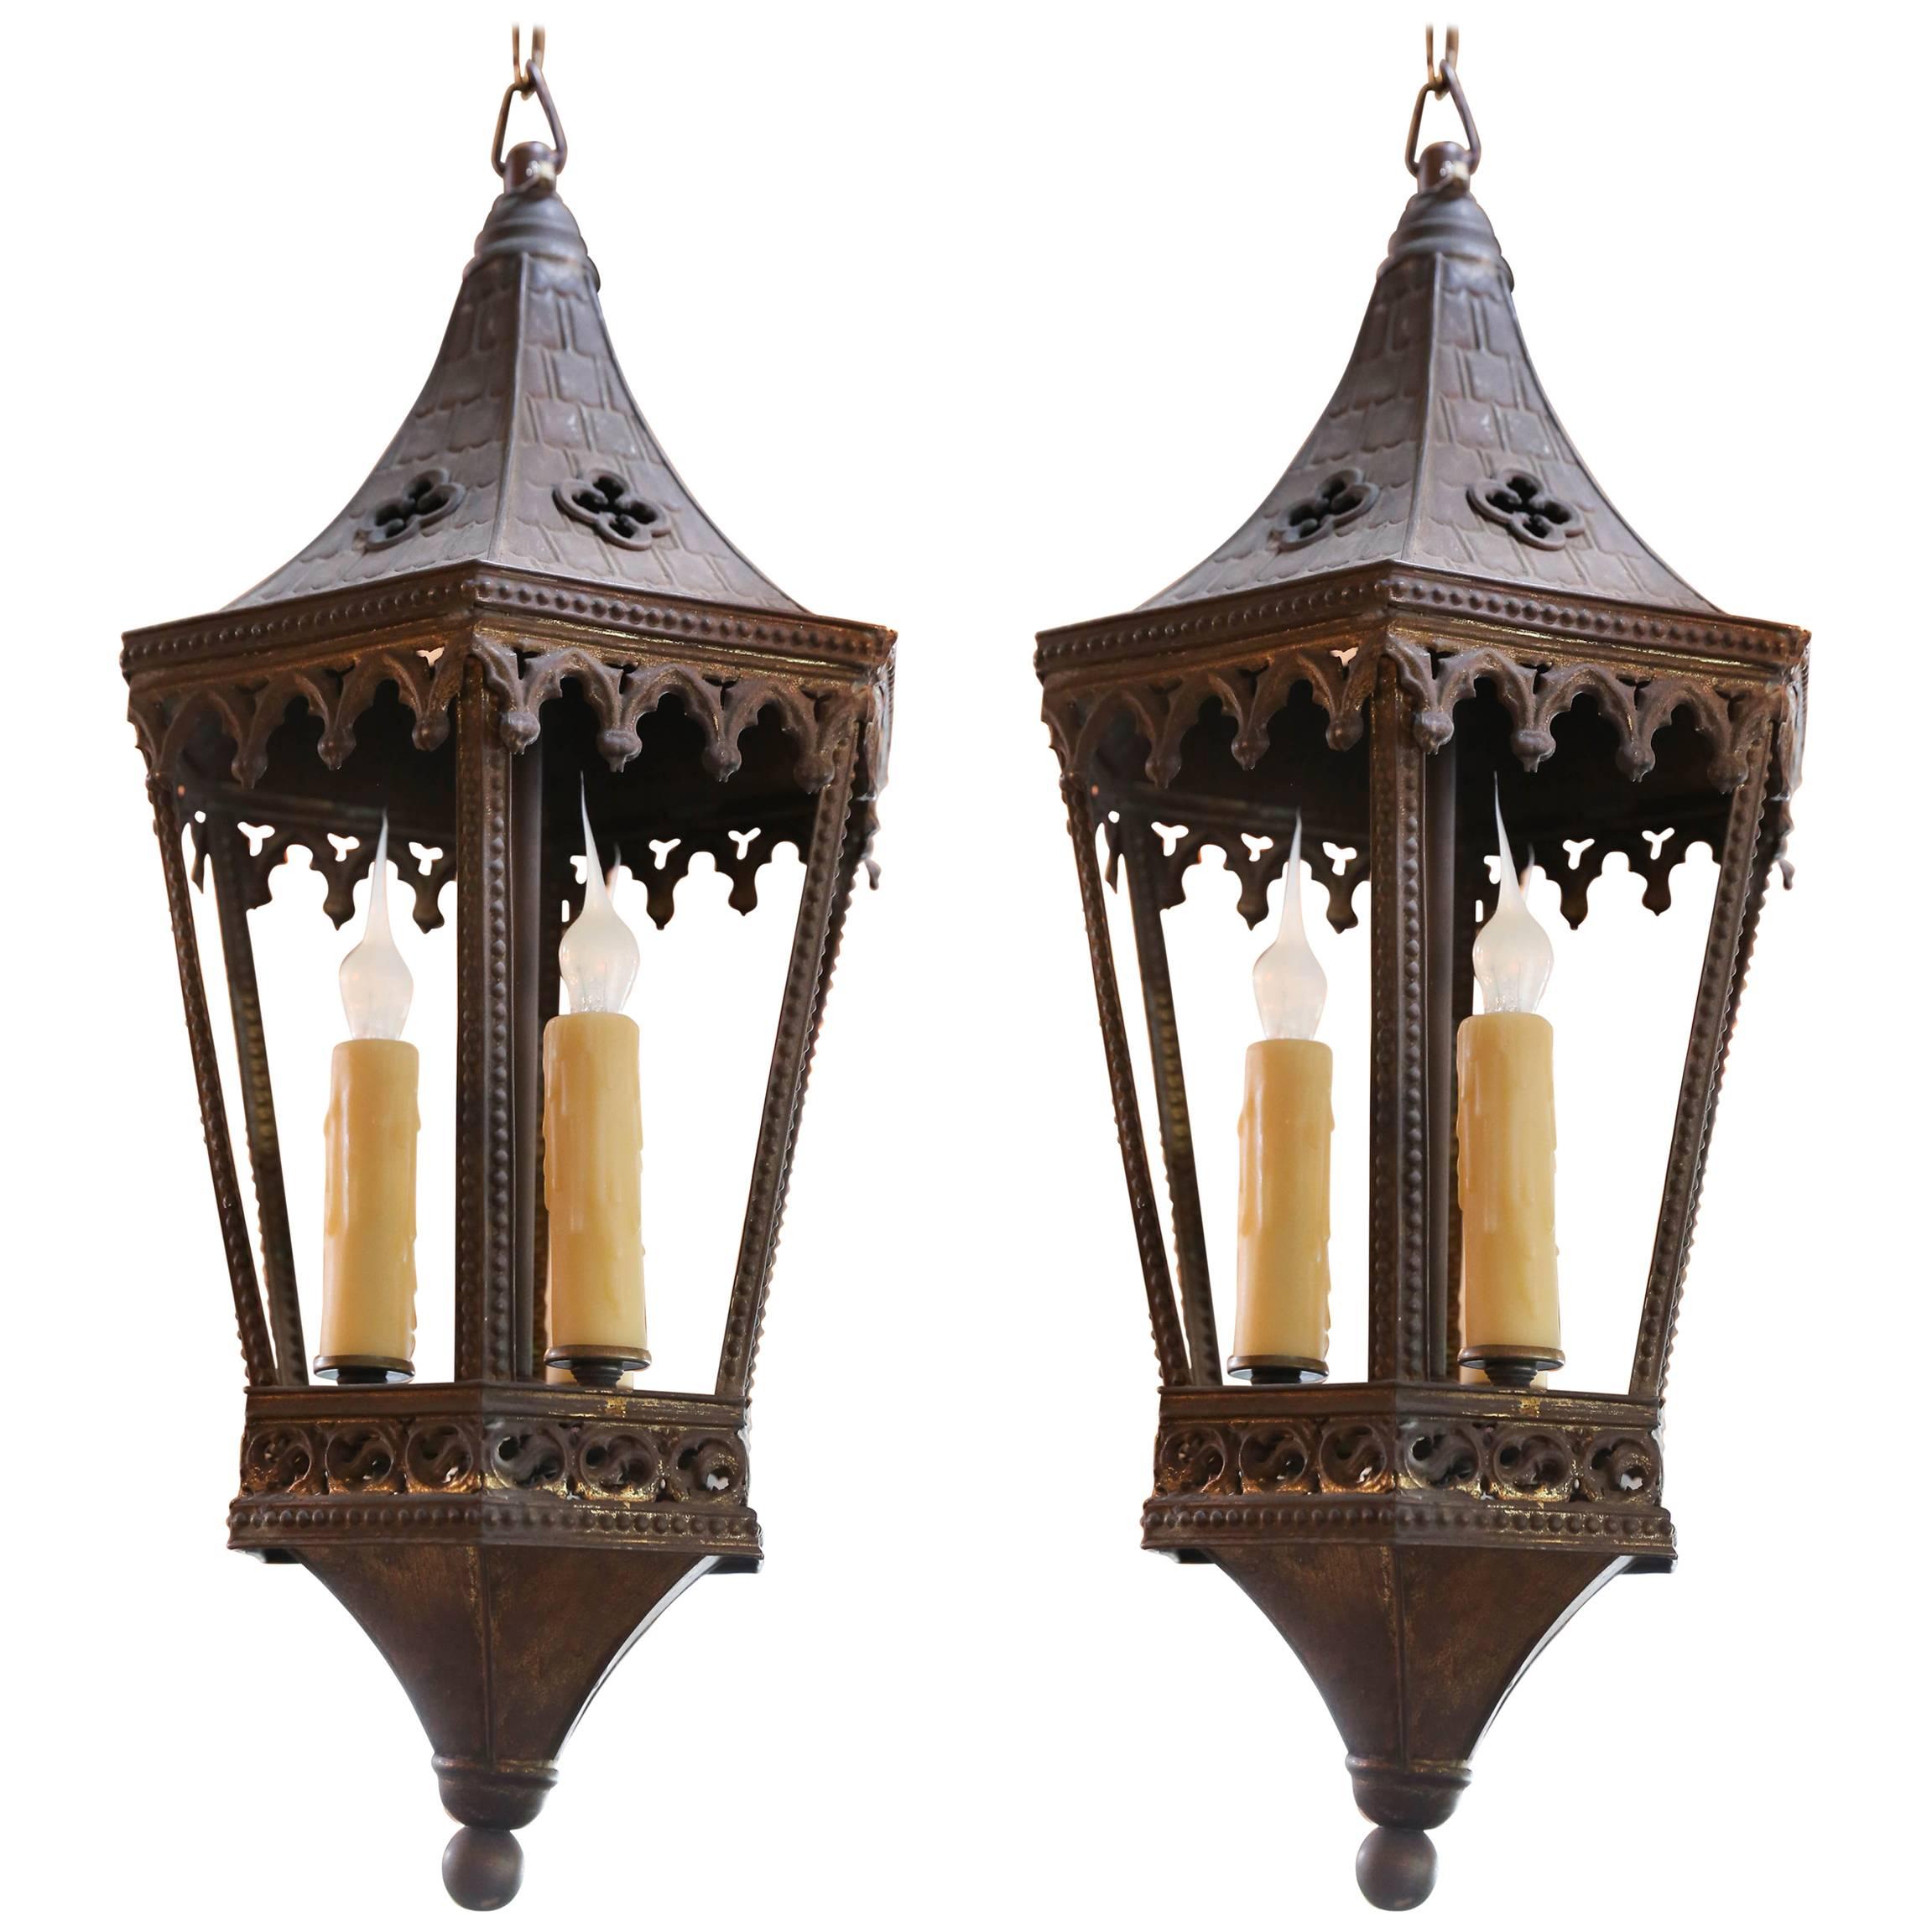 Near-Pair Brass Gothic Revival Lanterns from France, circa 1900